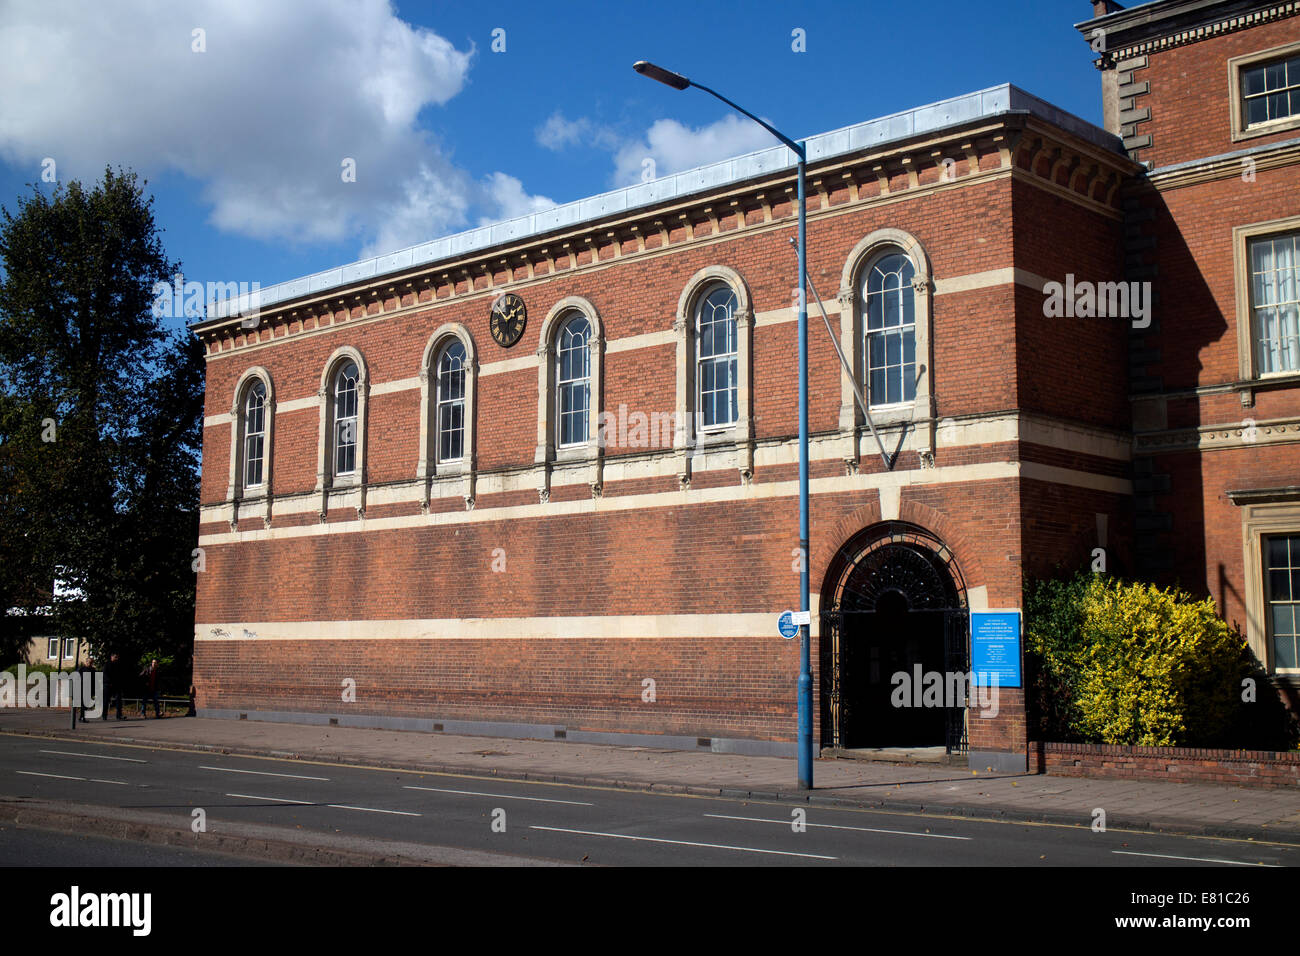 The Oratory, Edgbaston, Birmingham, UK Stock Photo